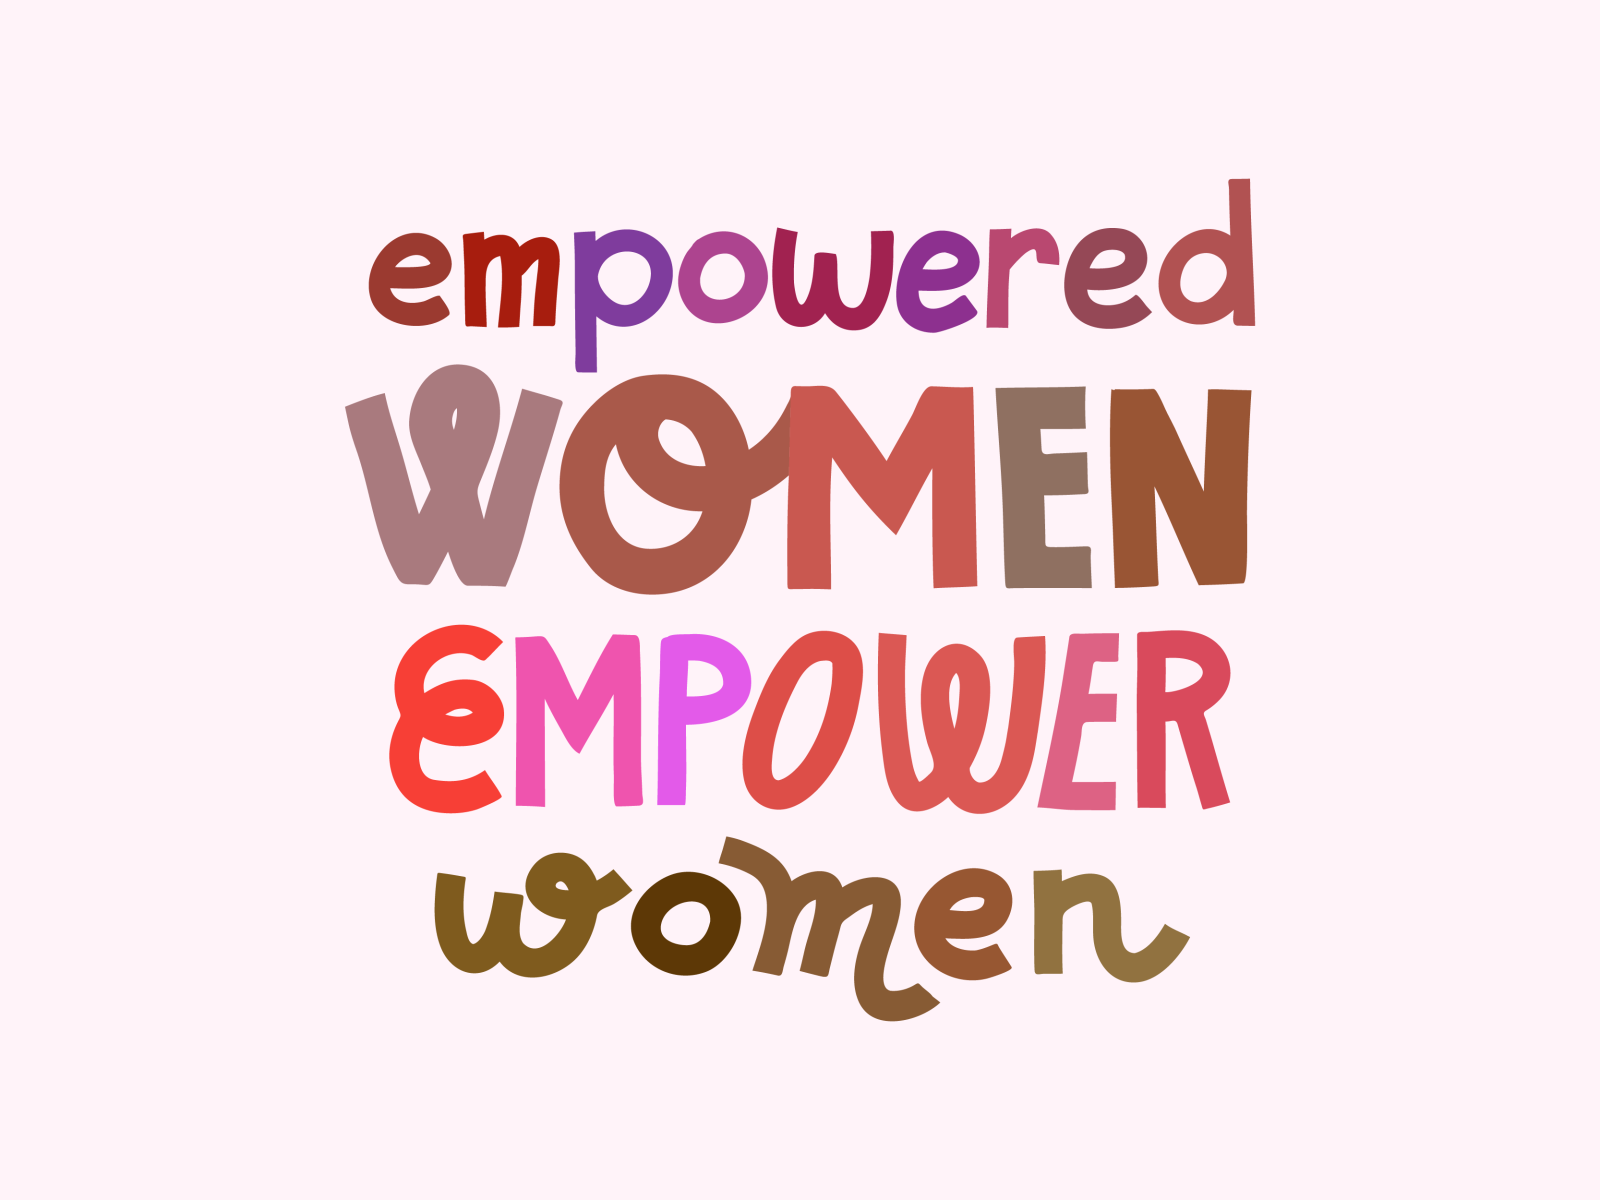 Empowered women empower women by Natalia Mikhaleva on Dribbble